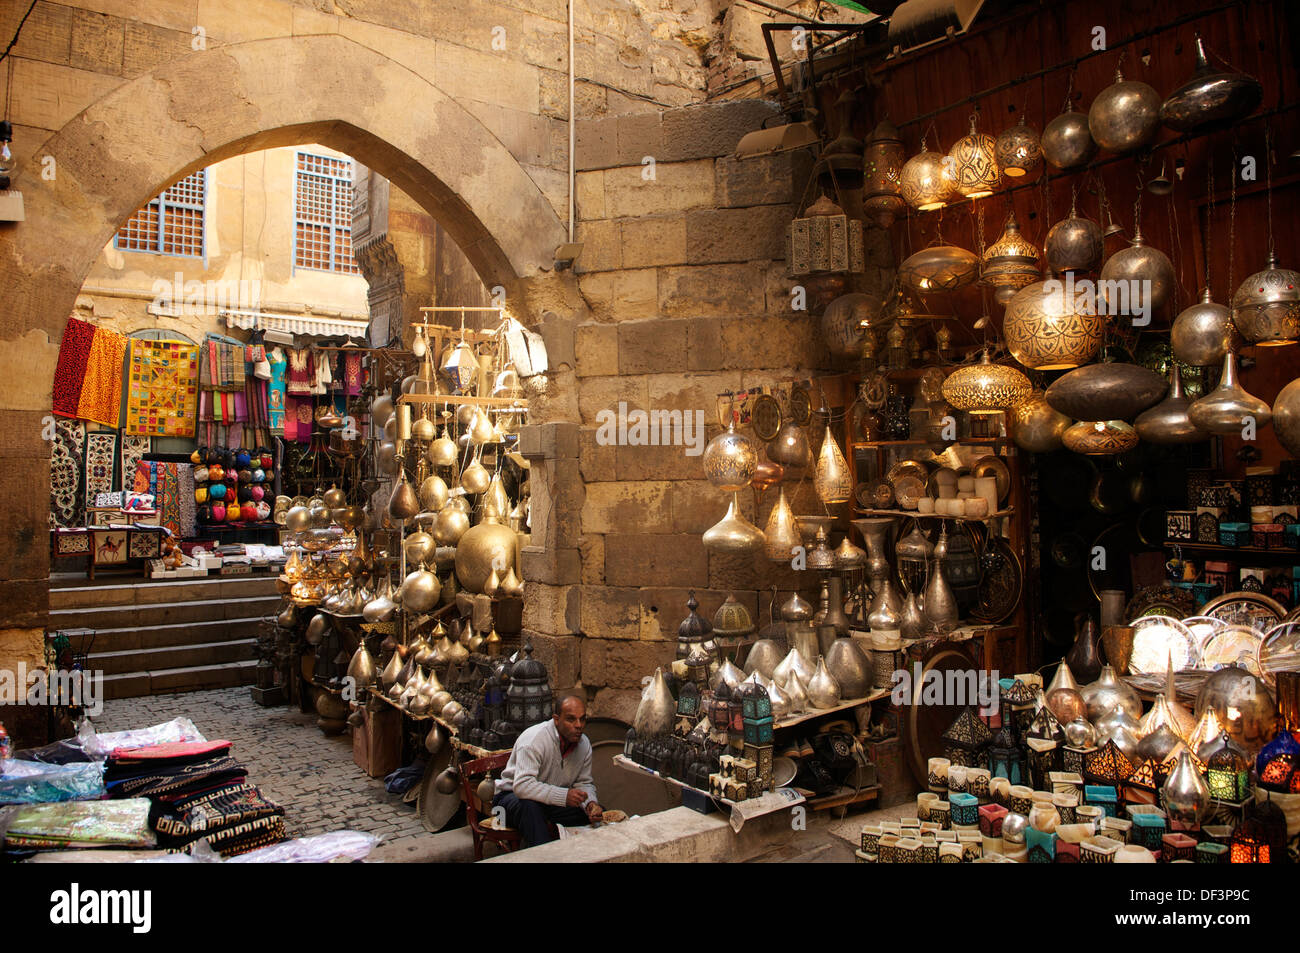 Marketplace in ancient egypt -Fotos und -Bildmaterial in hoher 